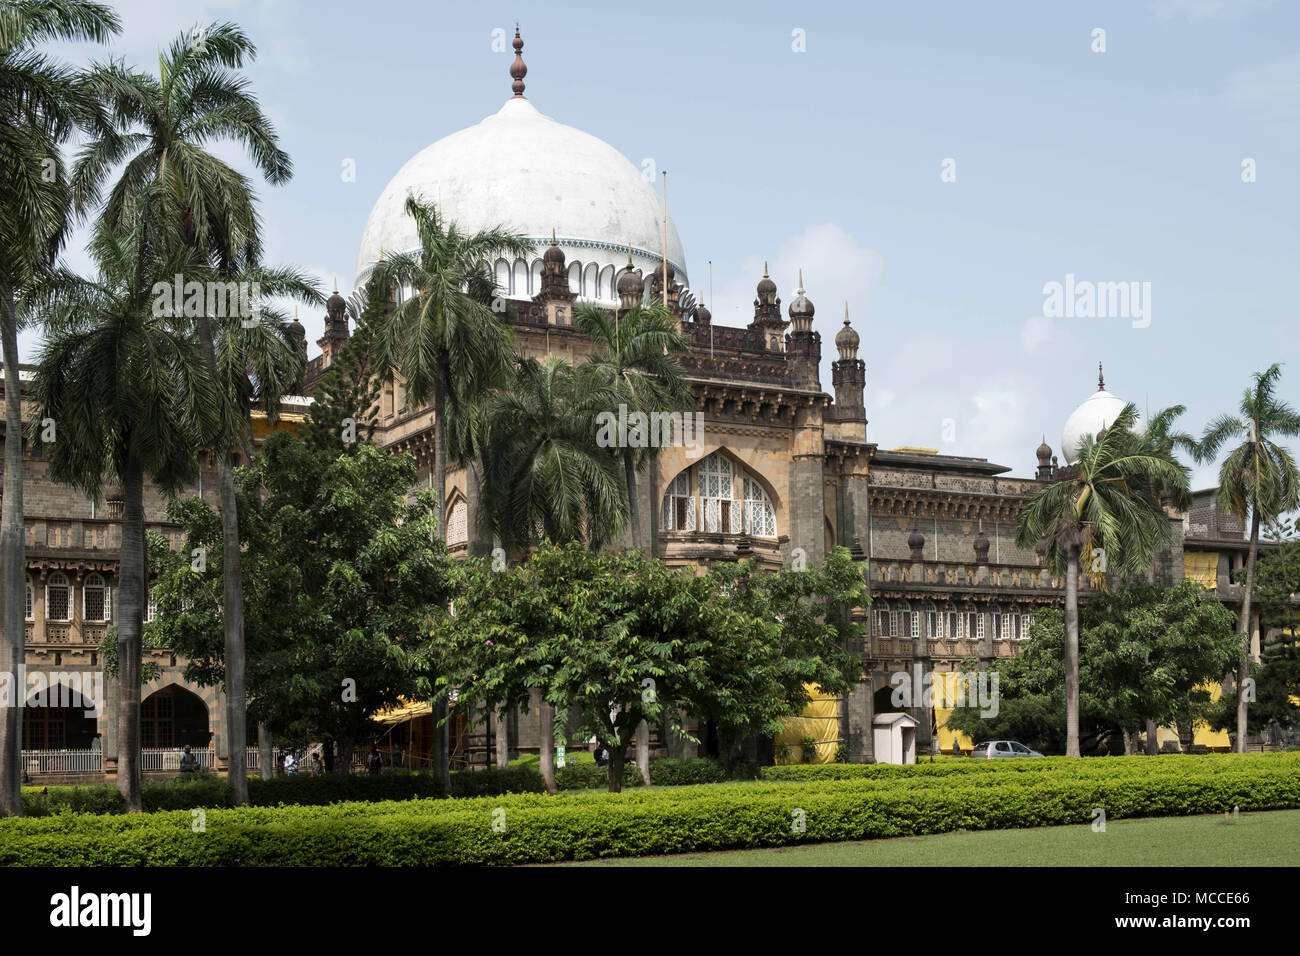 The Mumbai museum (Chhatrapati Shivaji Maharaj Vastu Sangrahalaya) formerly known as the Prince of Wales Musem of Western India, by George Wittet Stock Photo